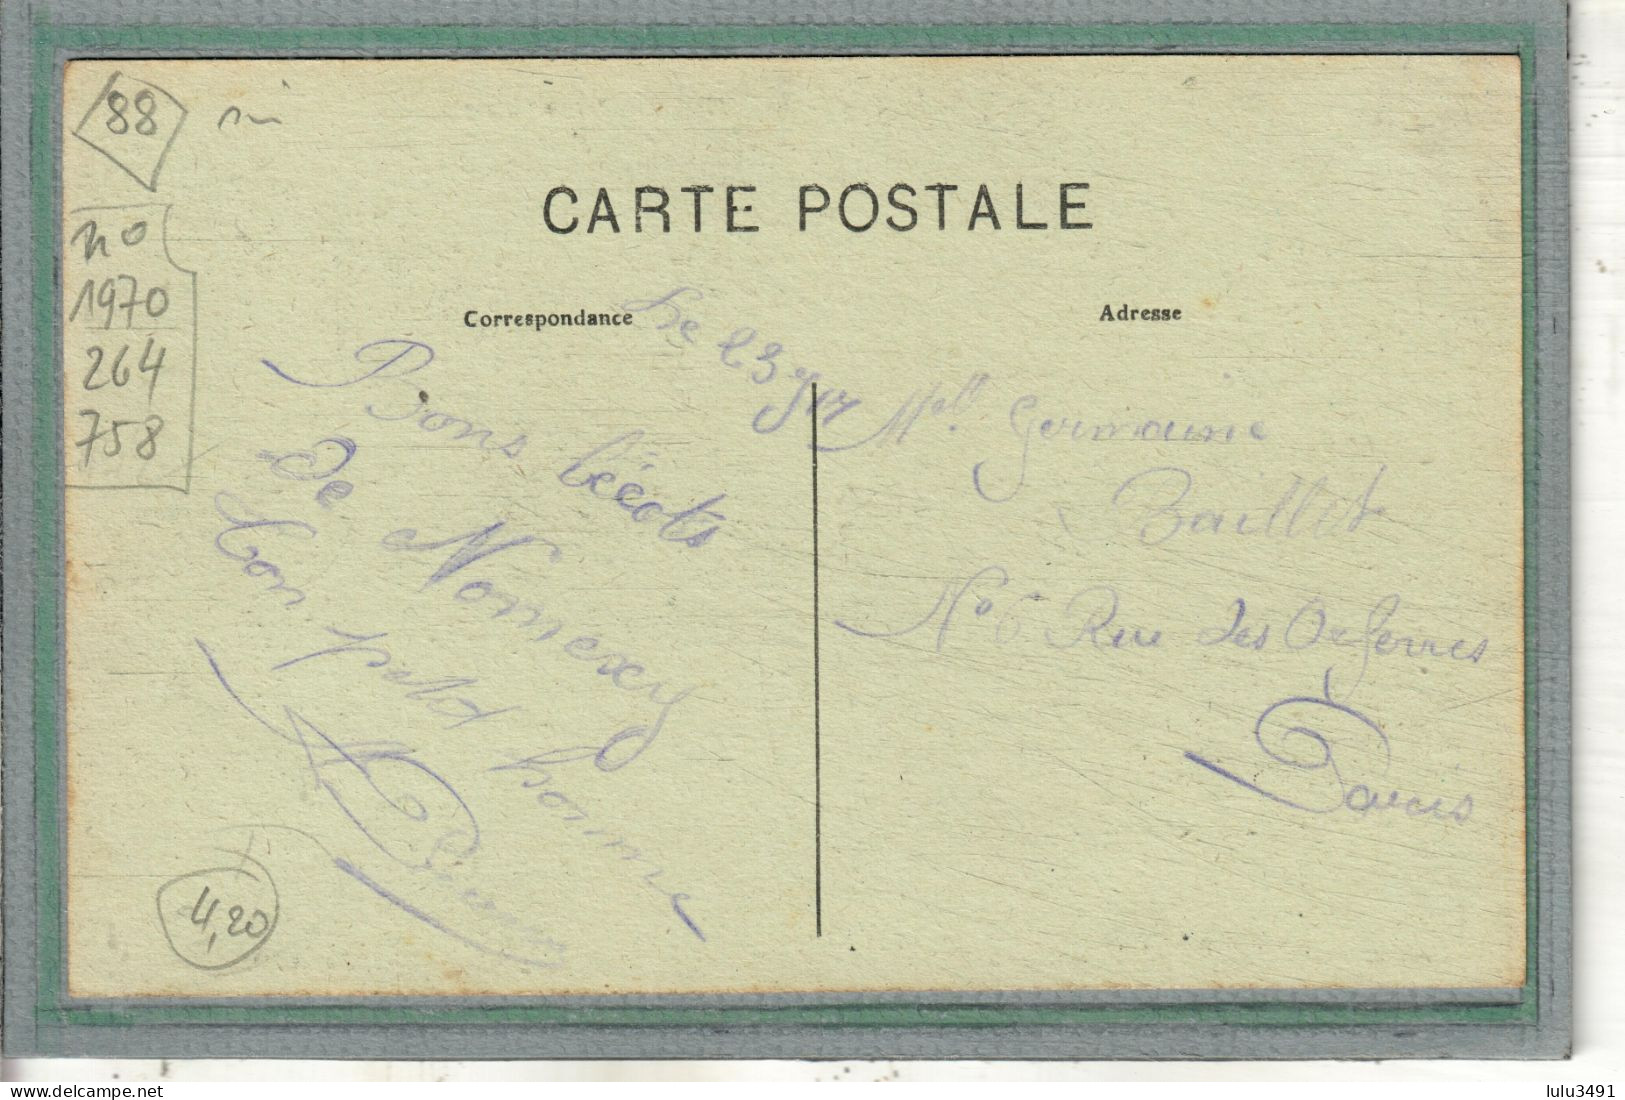 CPA - NOMEXY (88) - Aspect De La Rue De Lestrey En 1917 - Nomexy